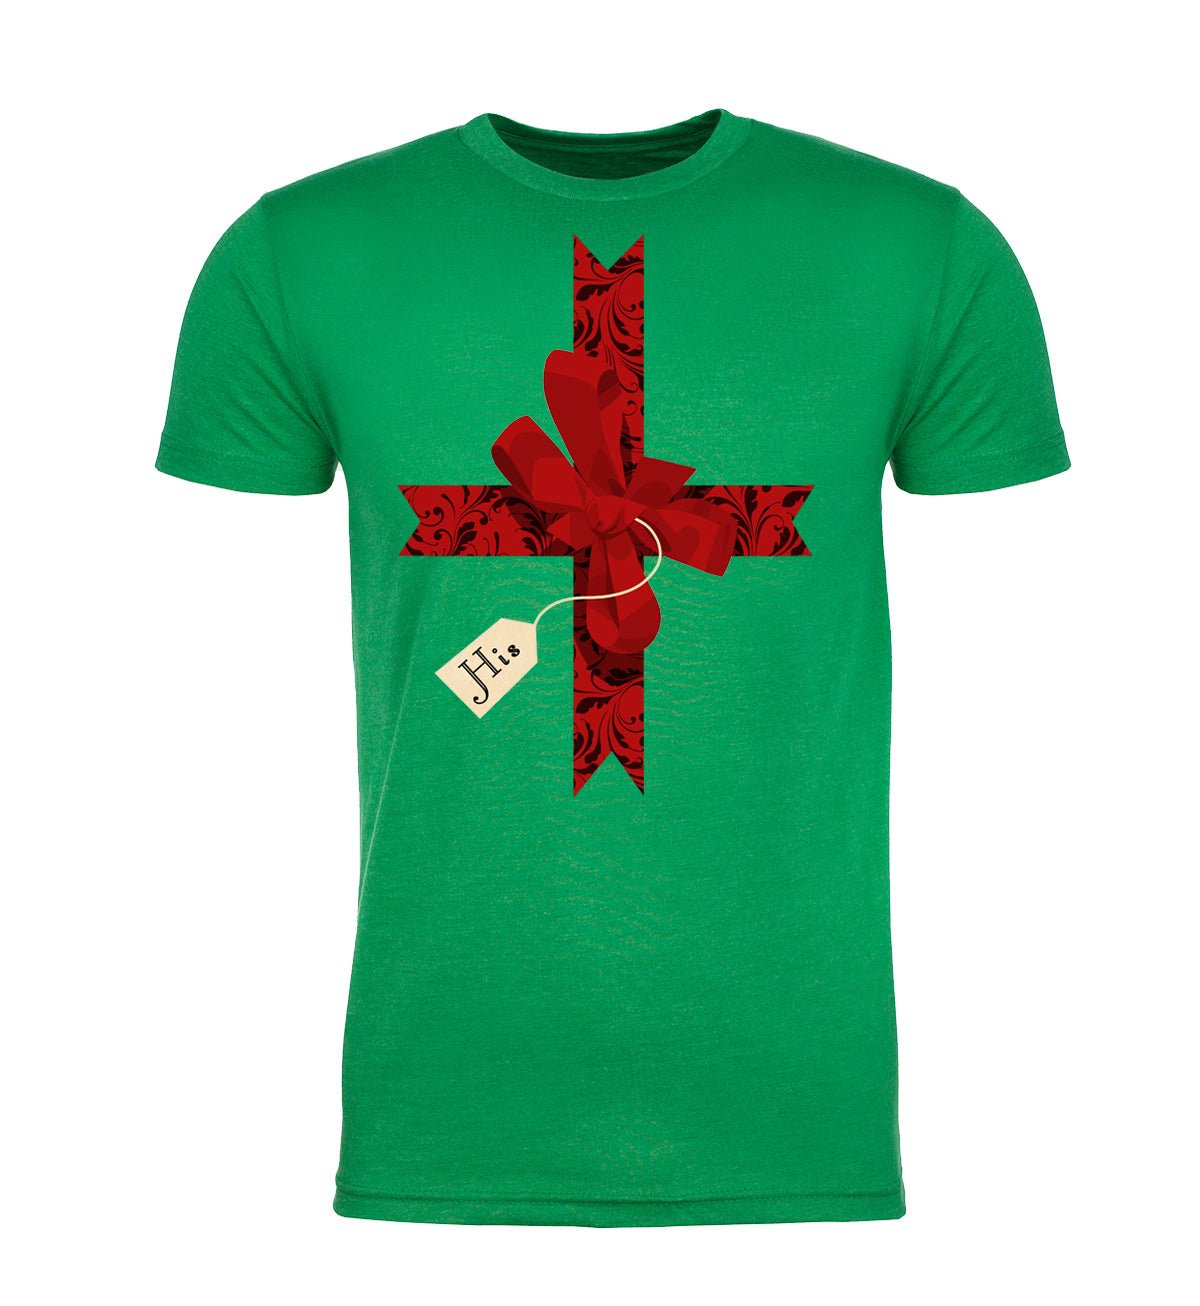 "His" Ribbon & Bow Unisex Christmas T Shirts